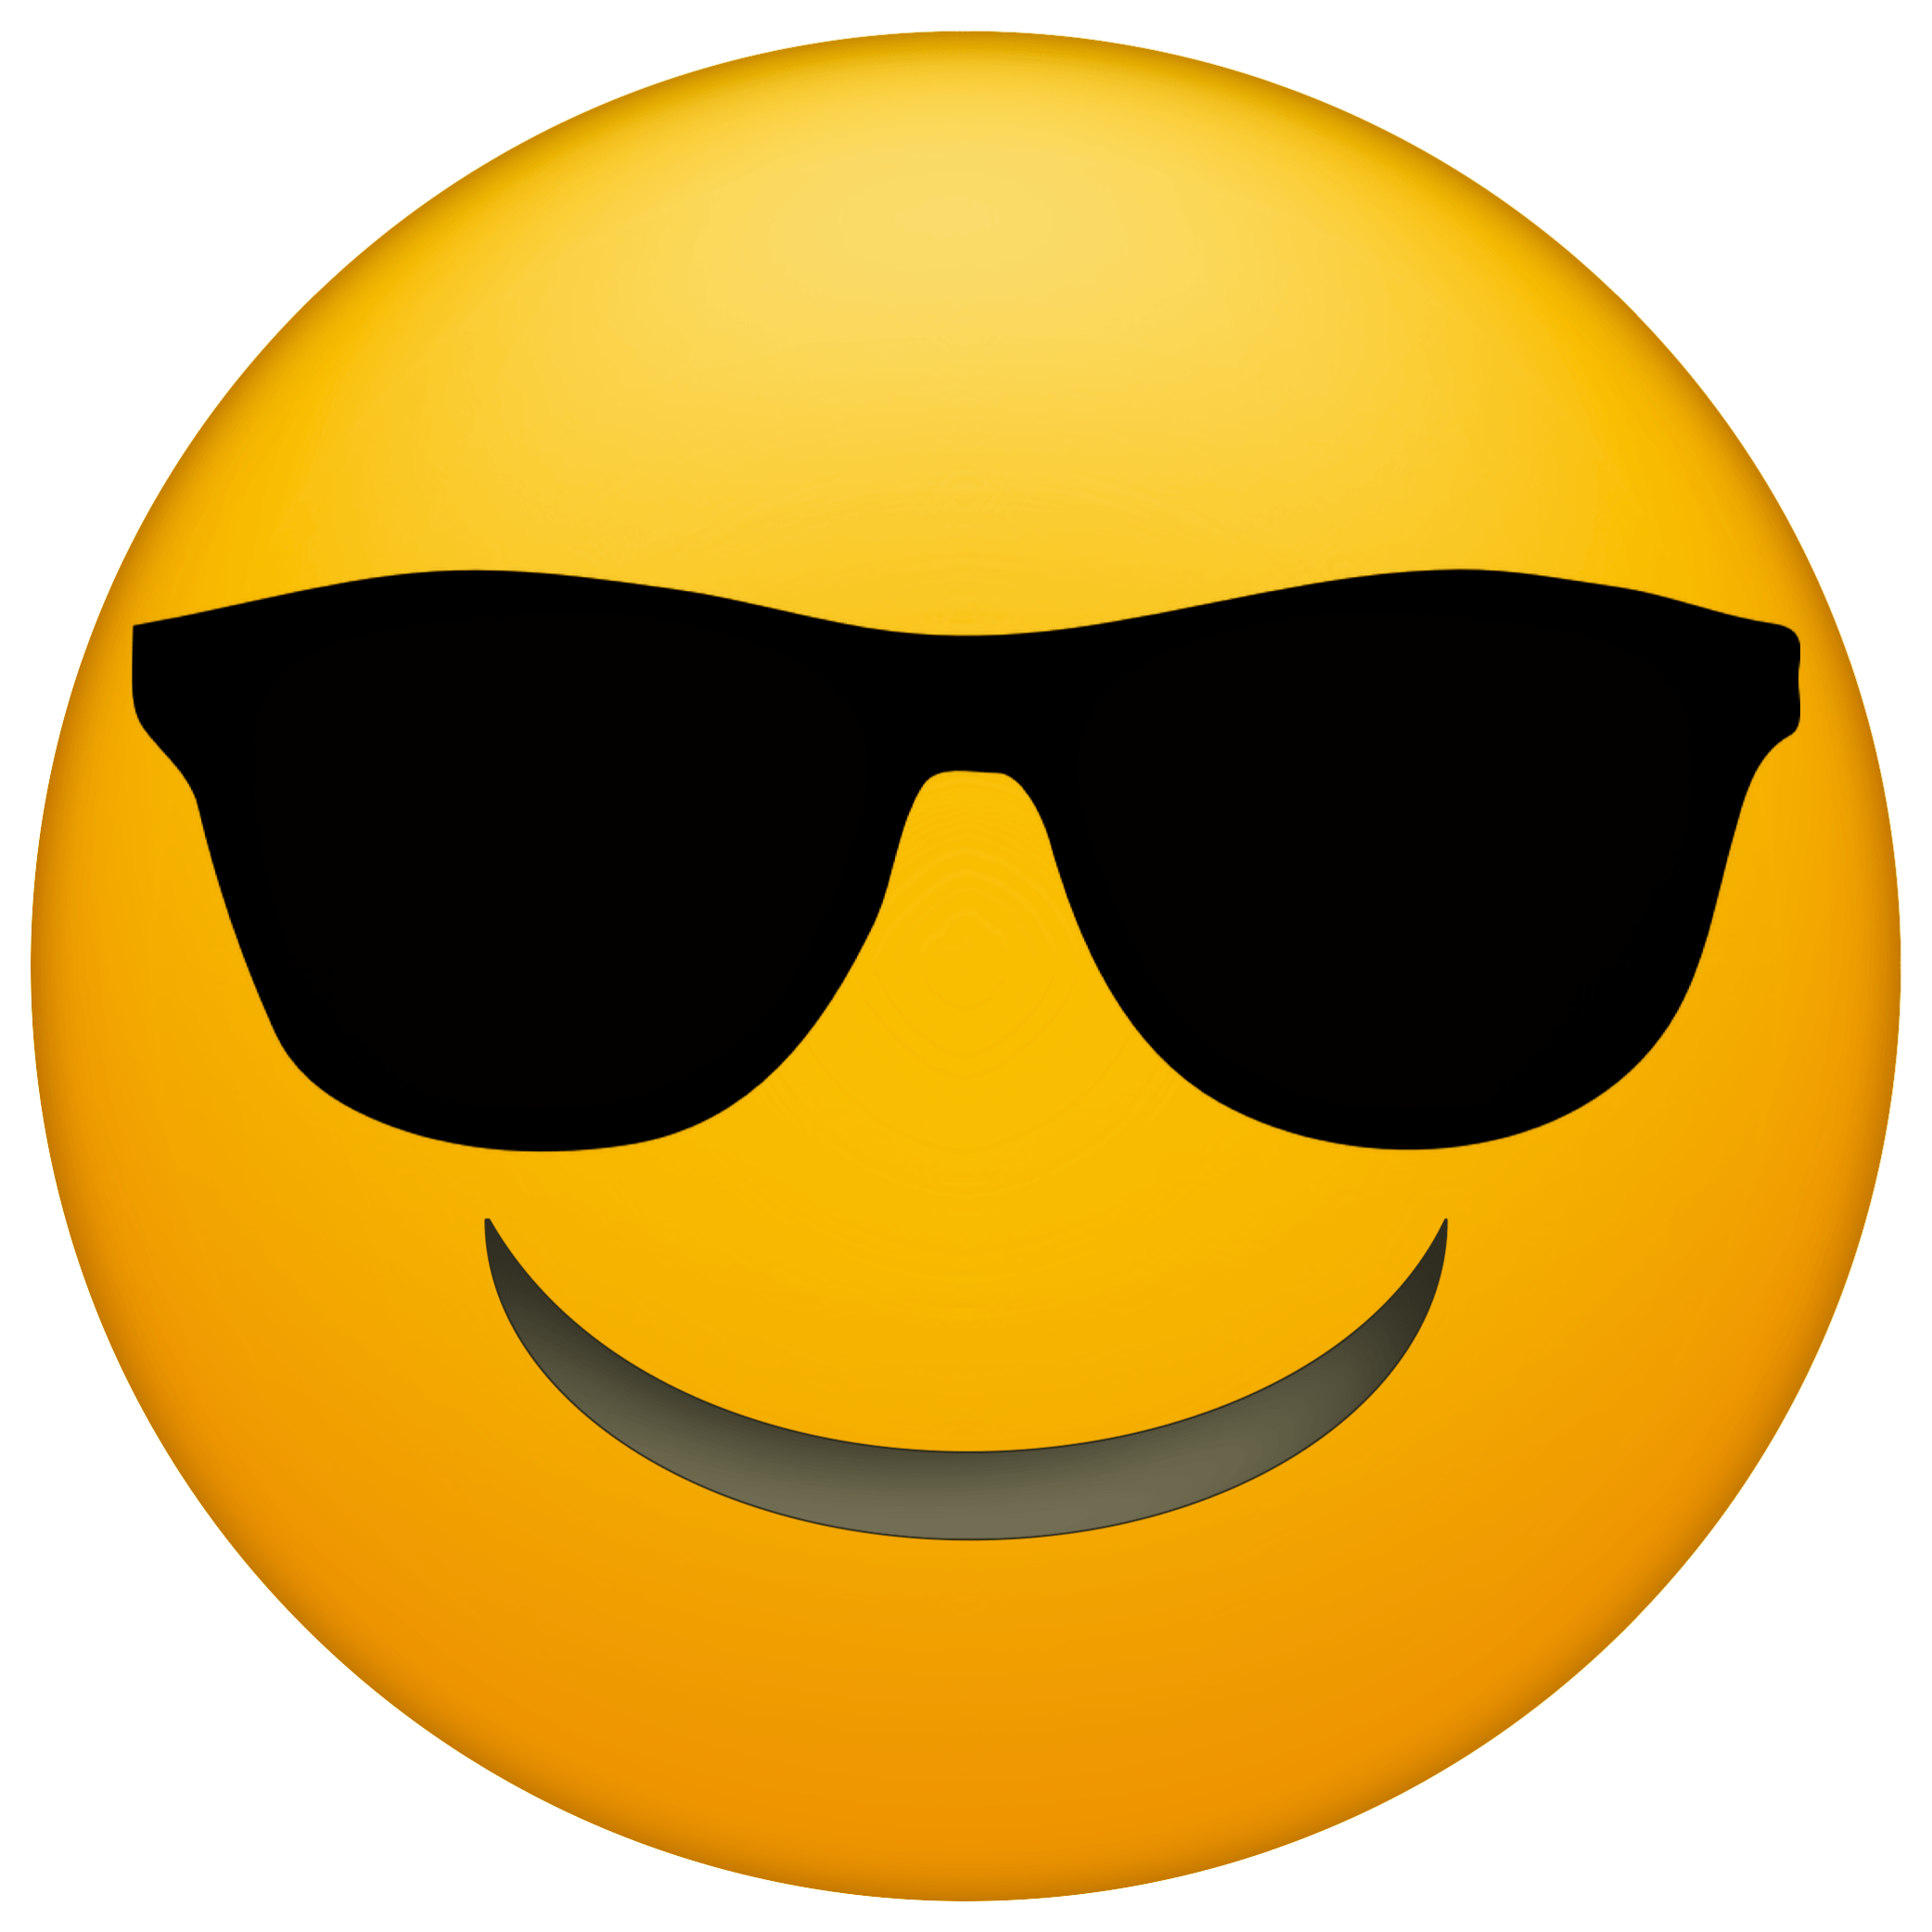 Download PNG image - Sunglasses Emoji PNG Transparent File 